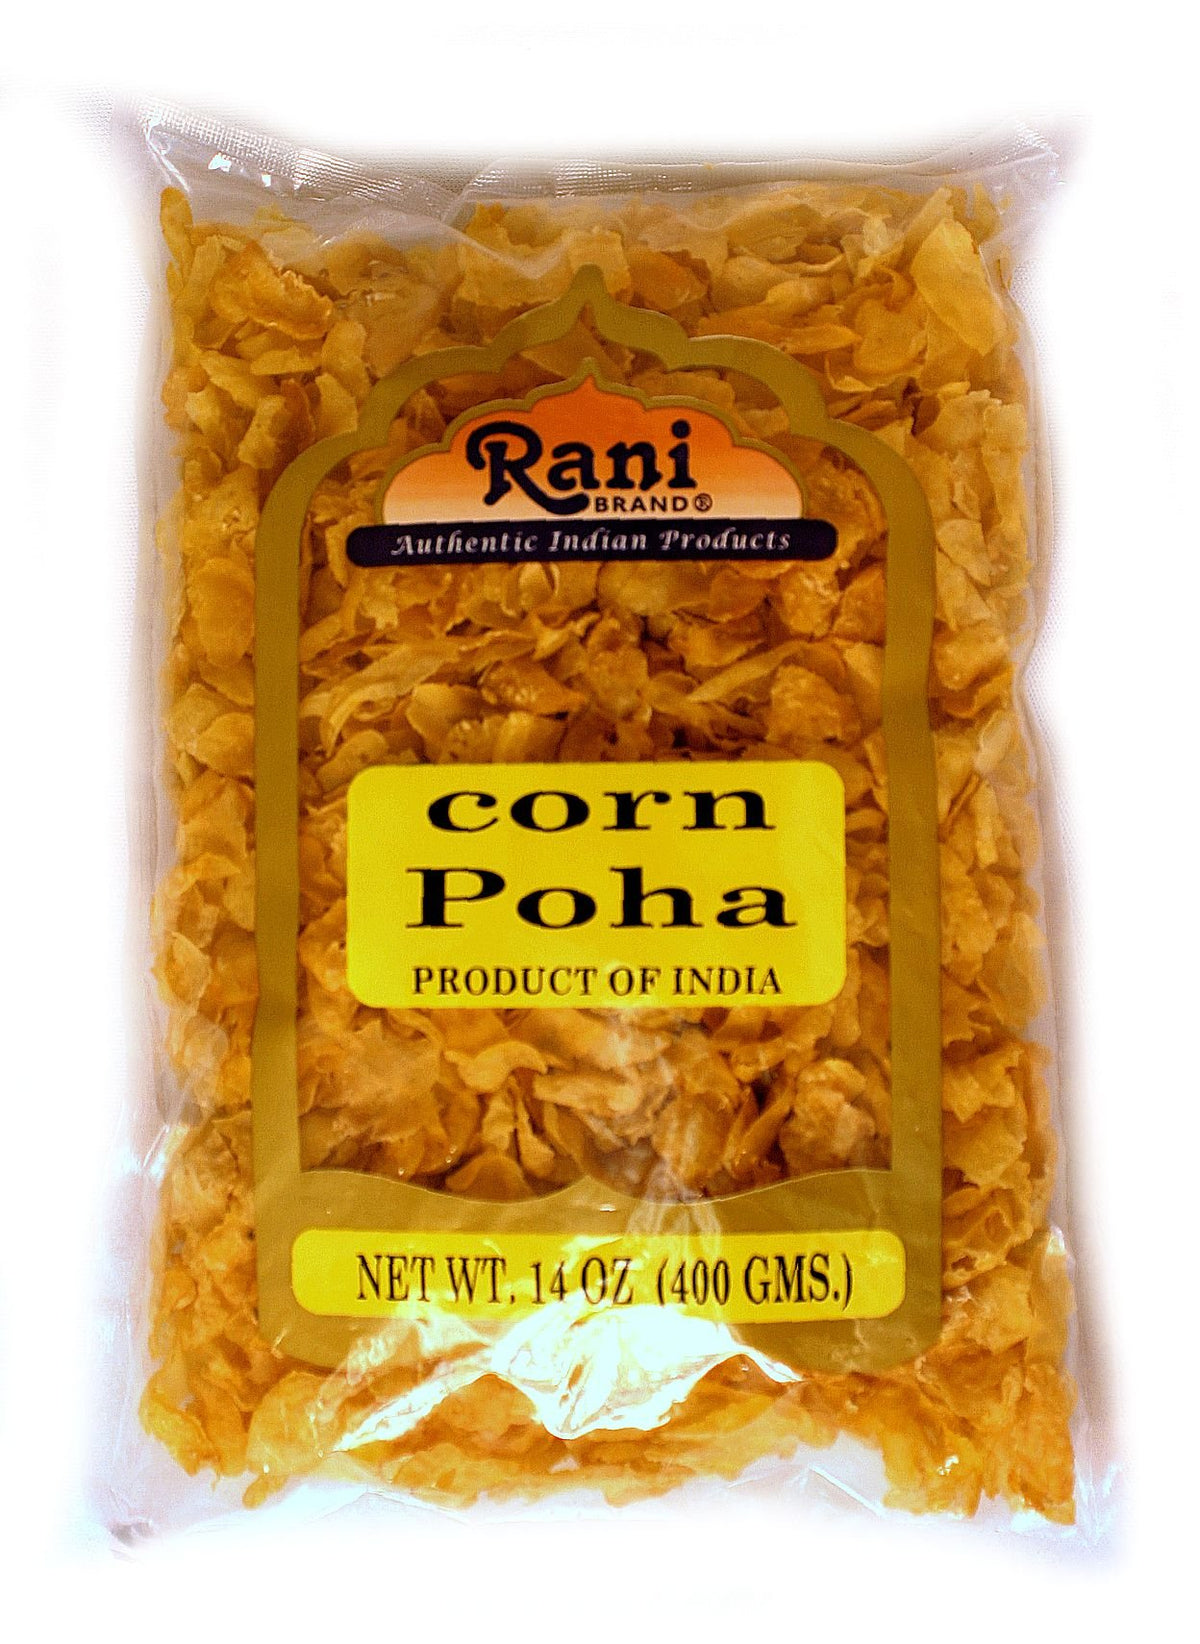 Rani Orange Food Color 25Gm~ FDA Approved~ All Natural